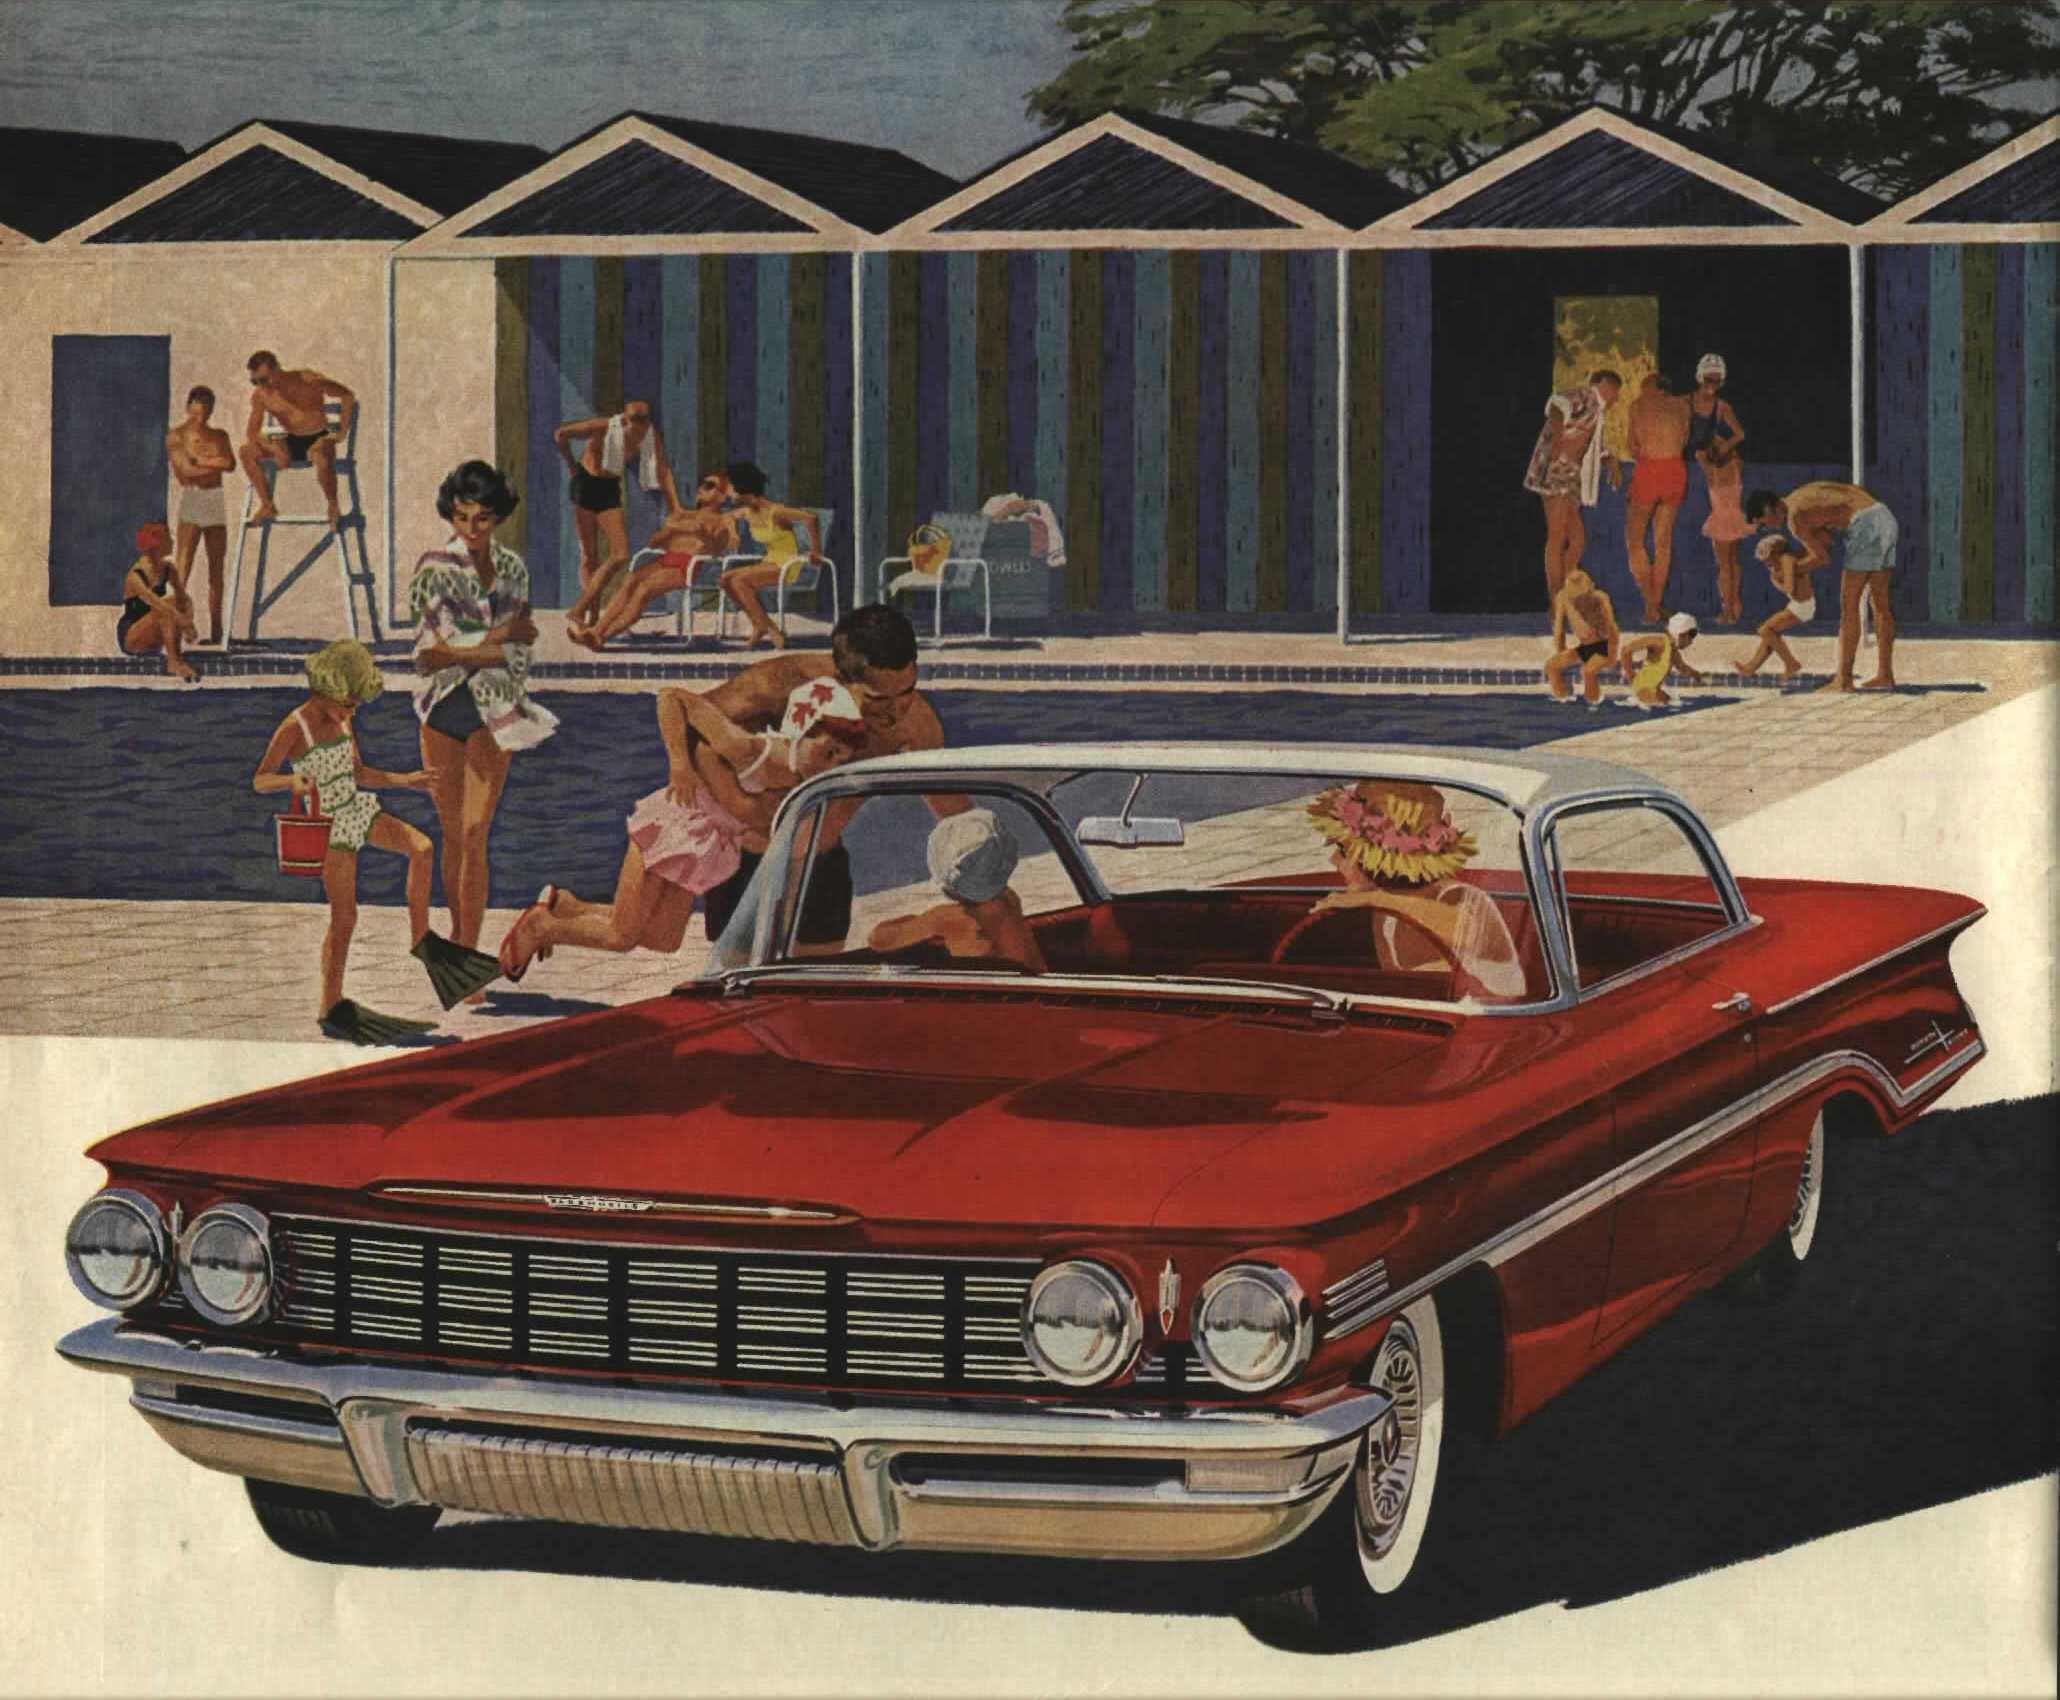 1964 oldsmobile 98 coupe / Oldsmobile Super 88 - Specs, Videos ...